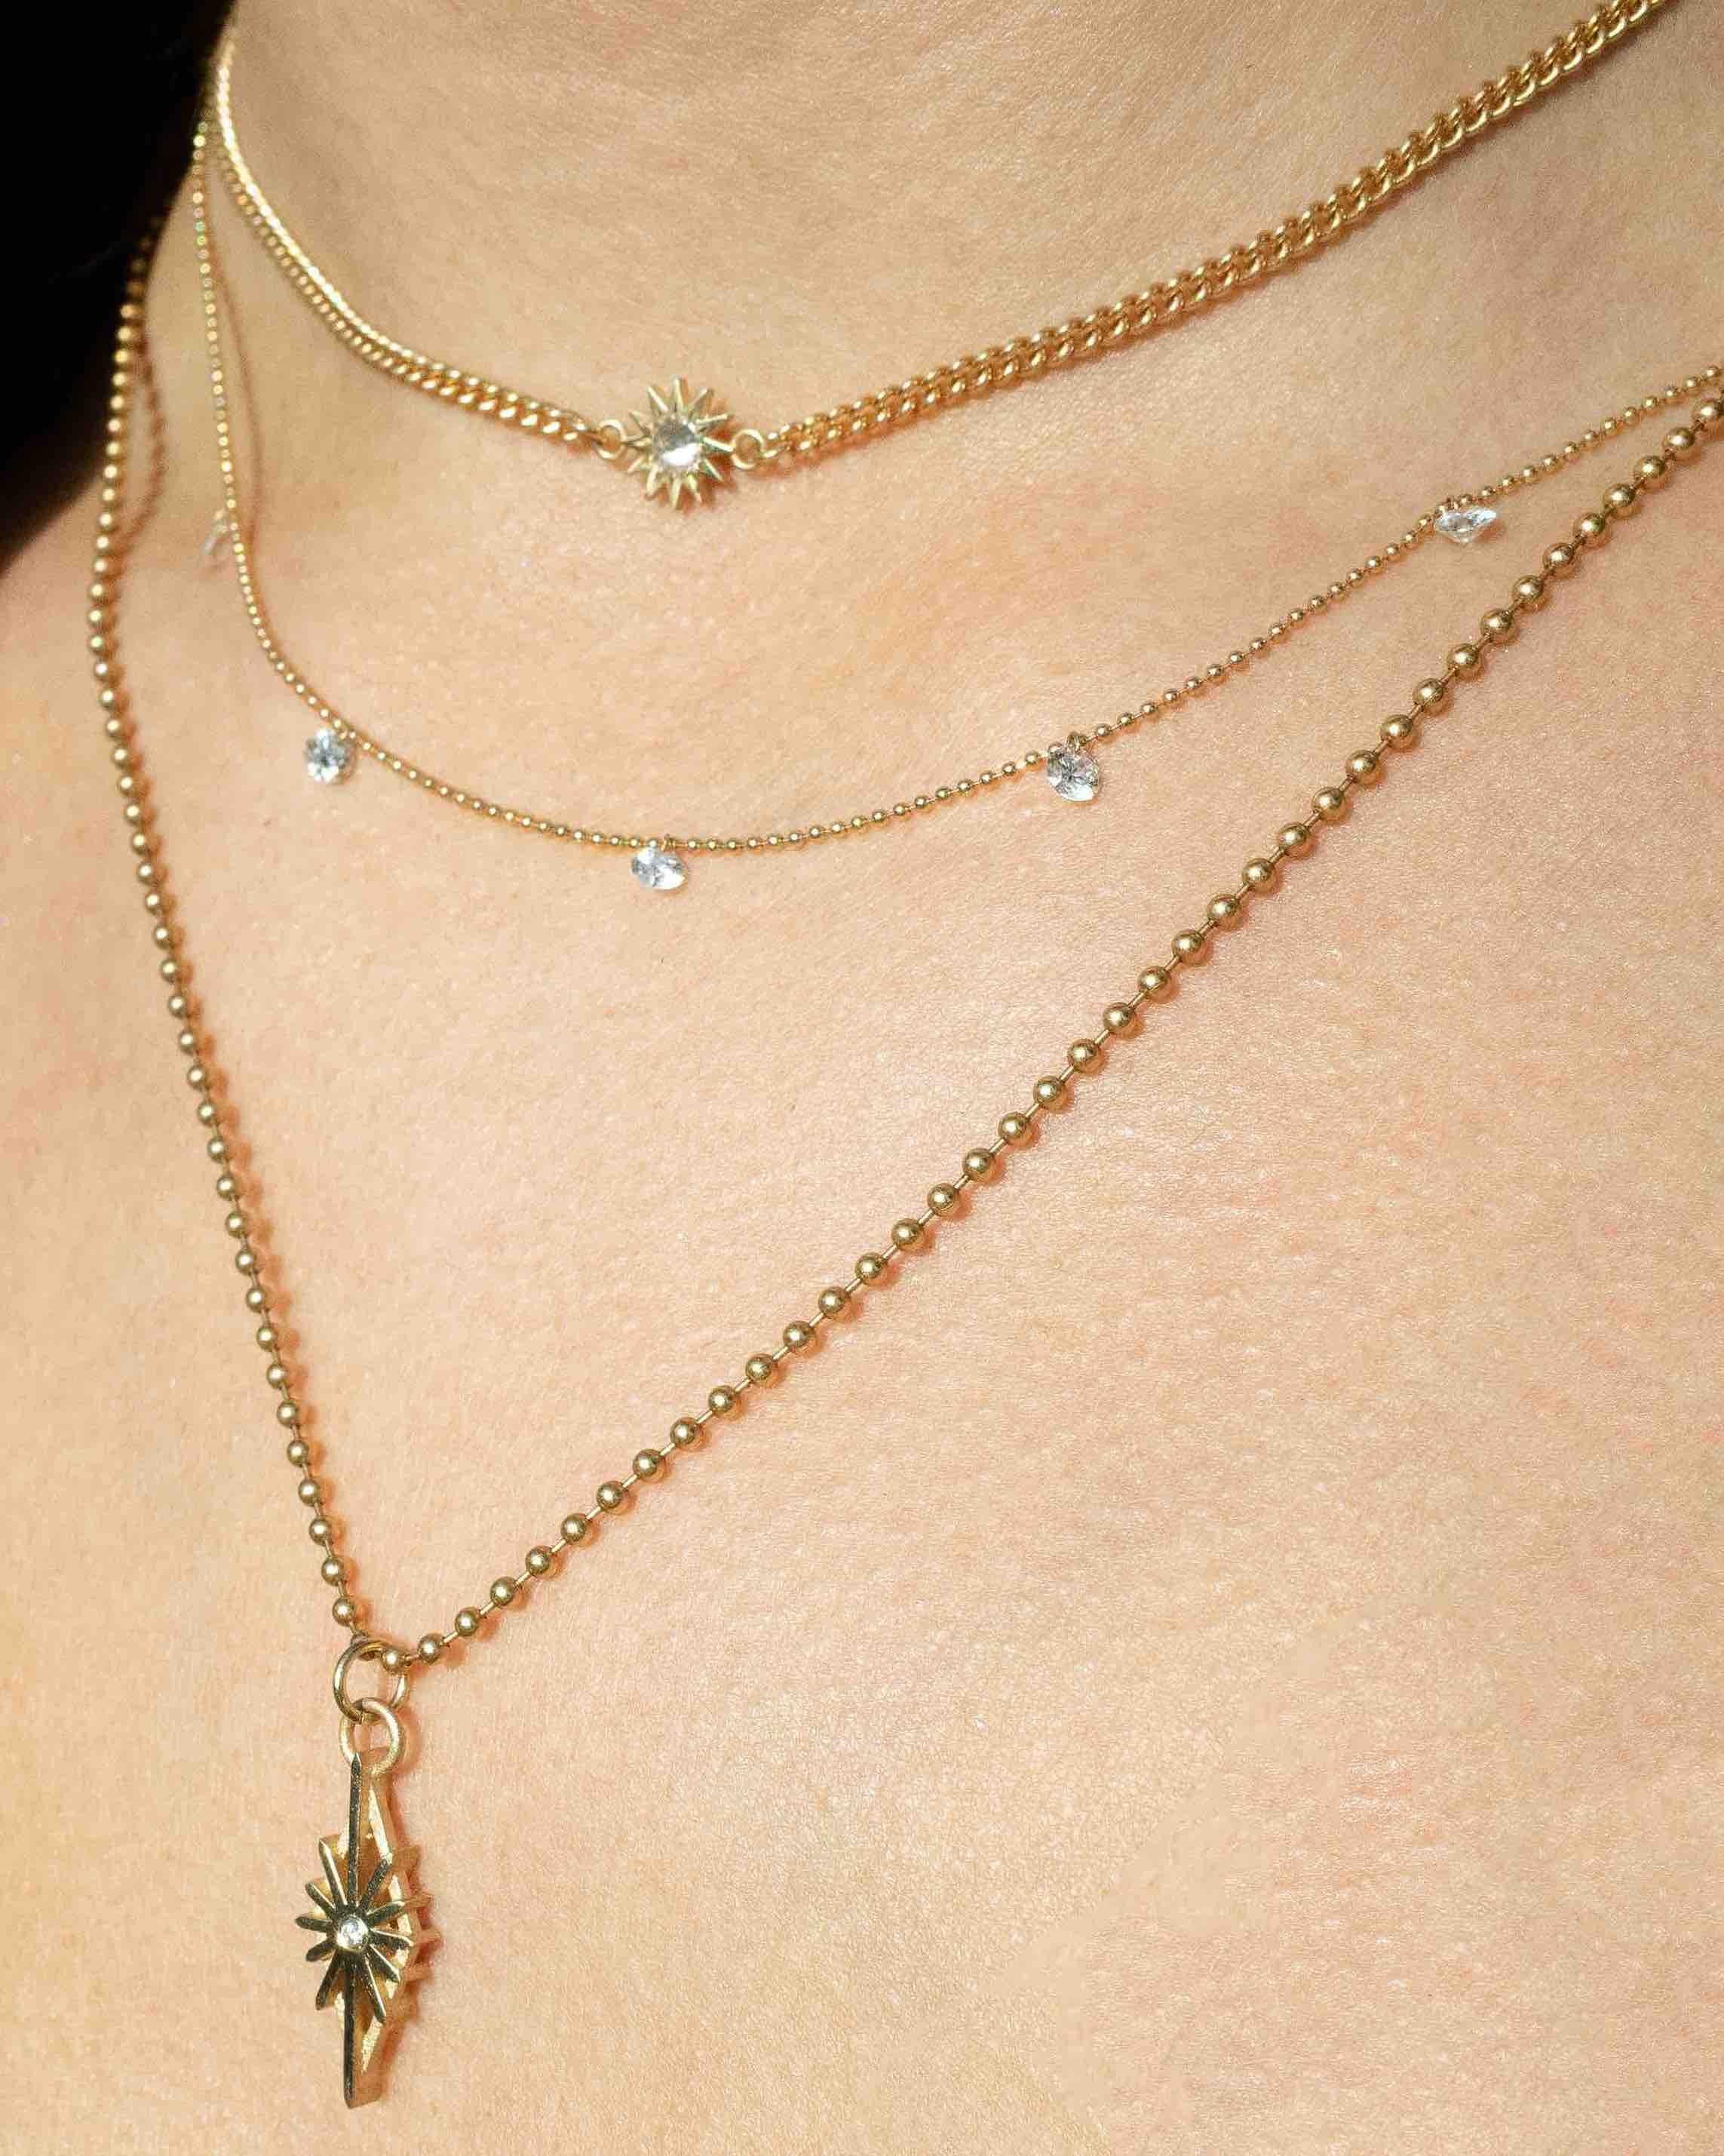 Brilliant Cut EMBLM Floating Diamond Necklace – 14k Gold Ball Chain, White Diamonds For Sale